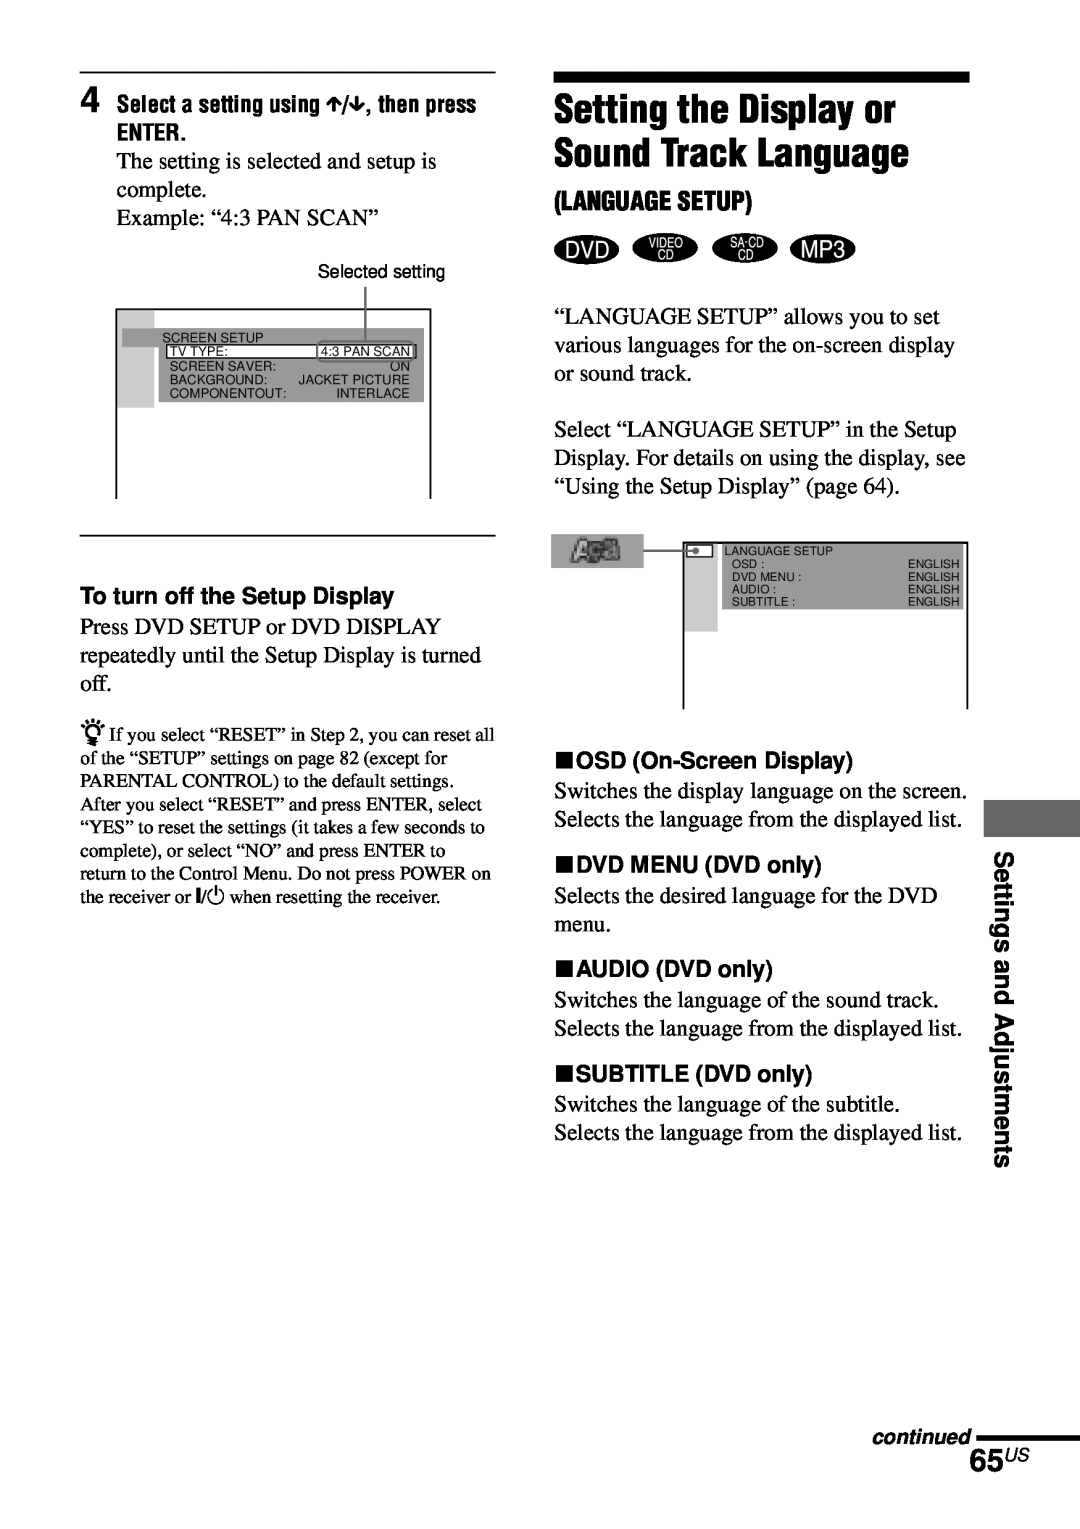 Sony AVD-S50ES Setting the Display or Sound Track Language, 65US, Language Setup, xOSD On-ScreenDisplay, xAUDIO DVD only 